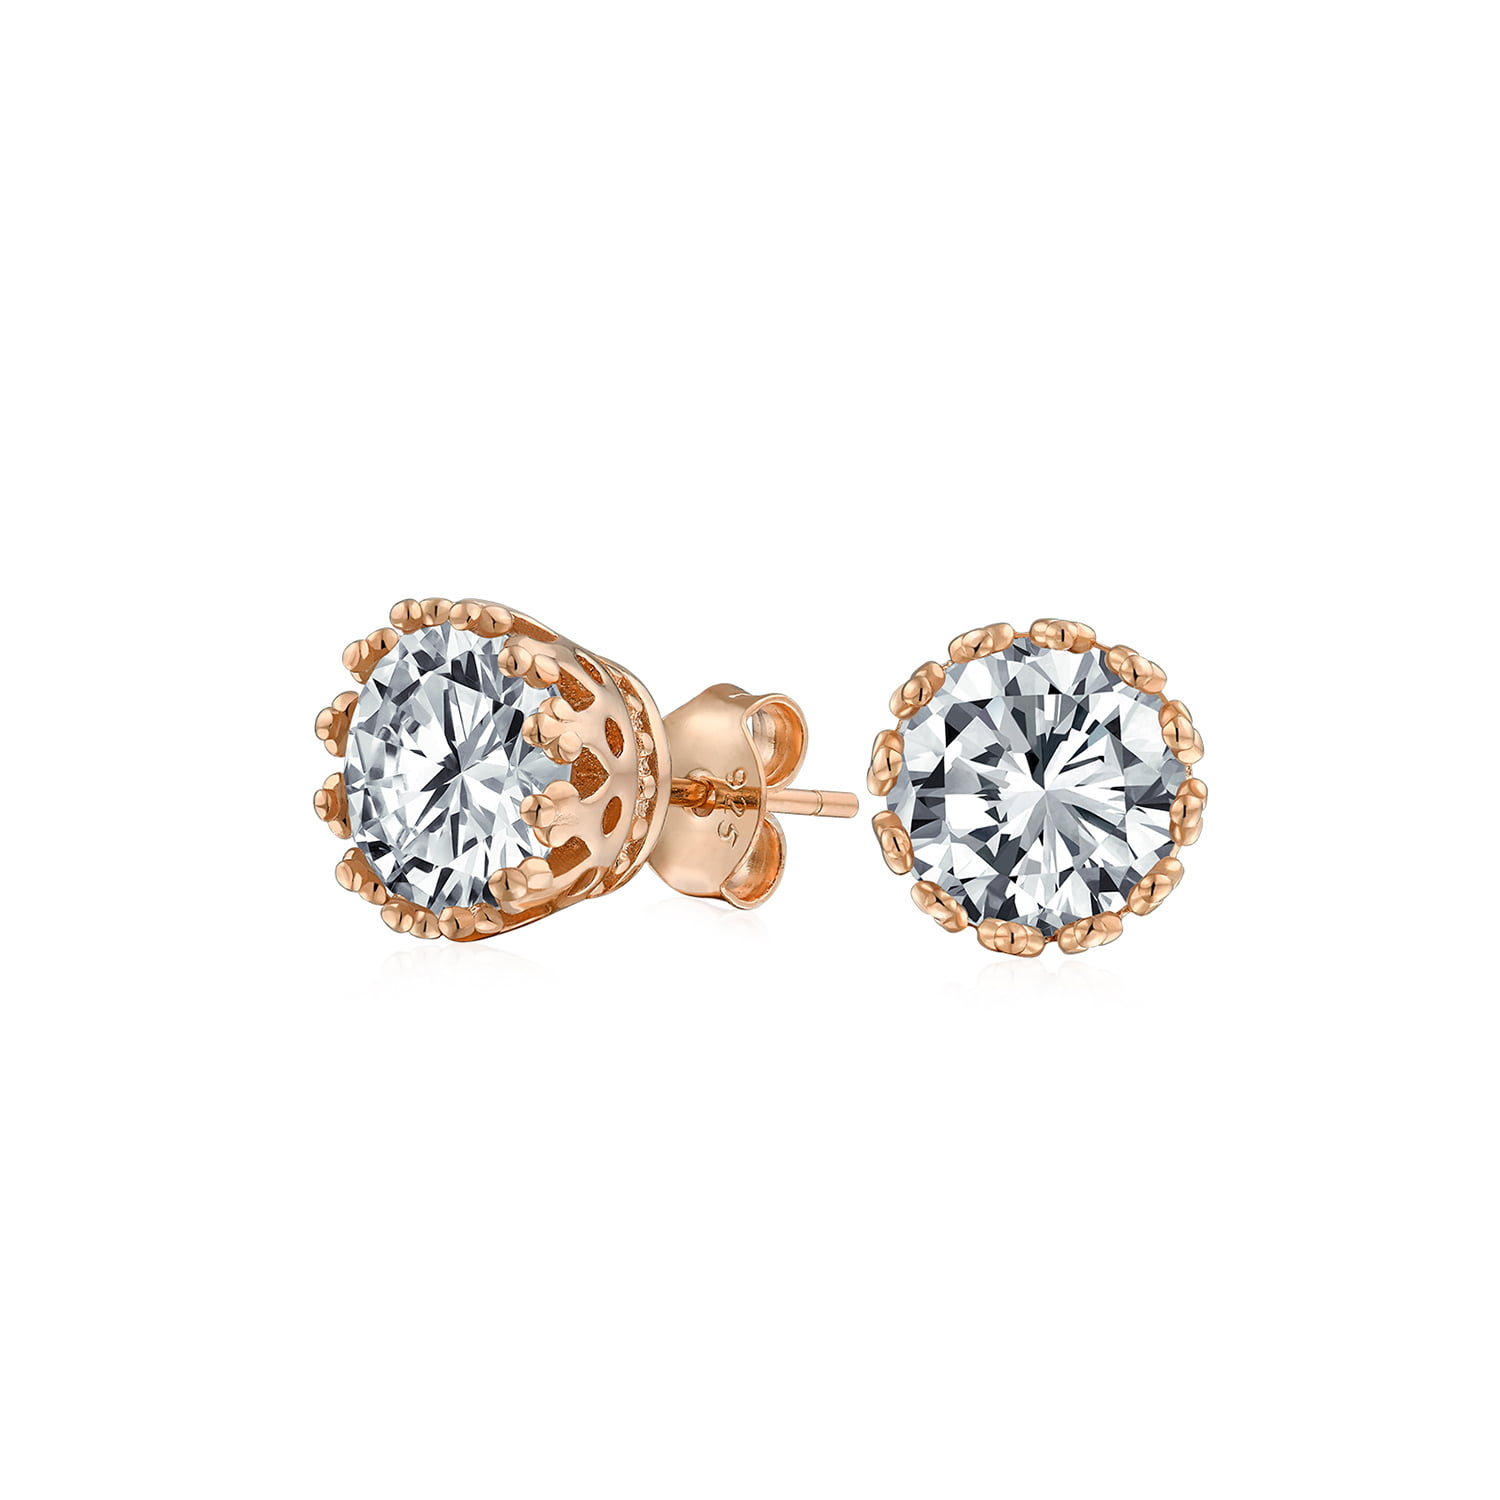 Women Gold Plated Clear CZ Cubic Zirconia Stones Earrings Jewelry